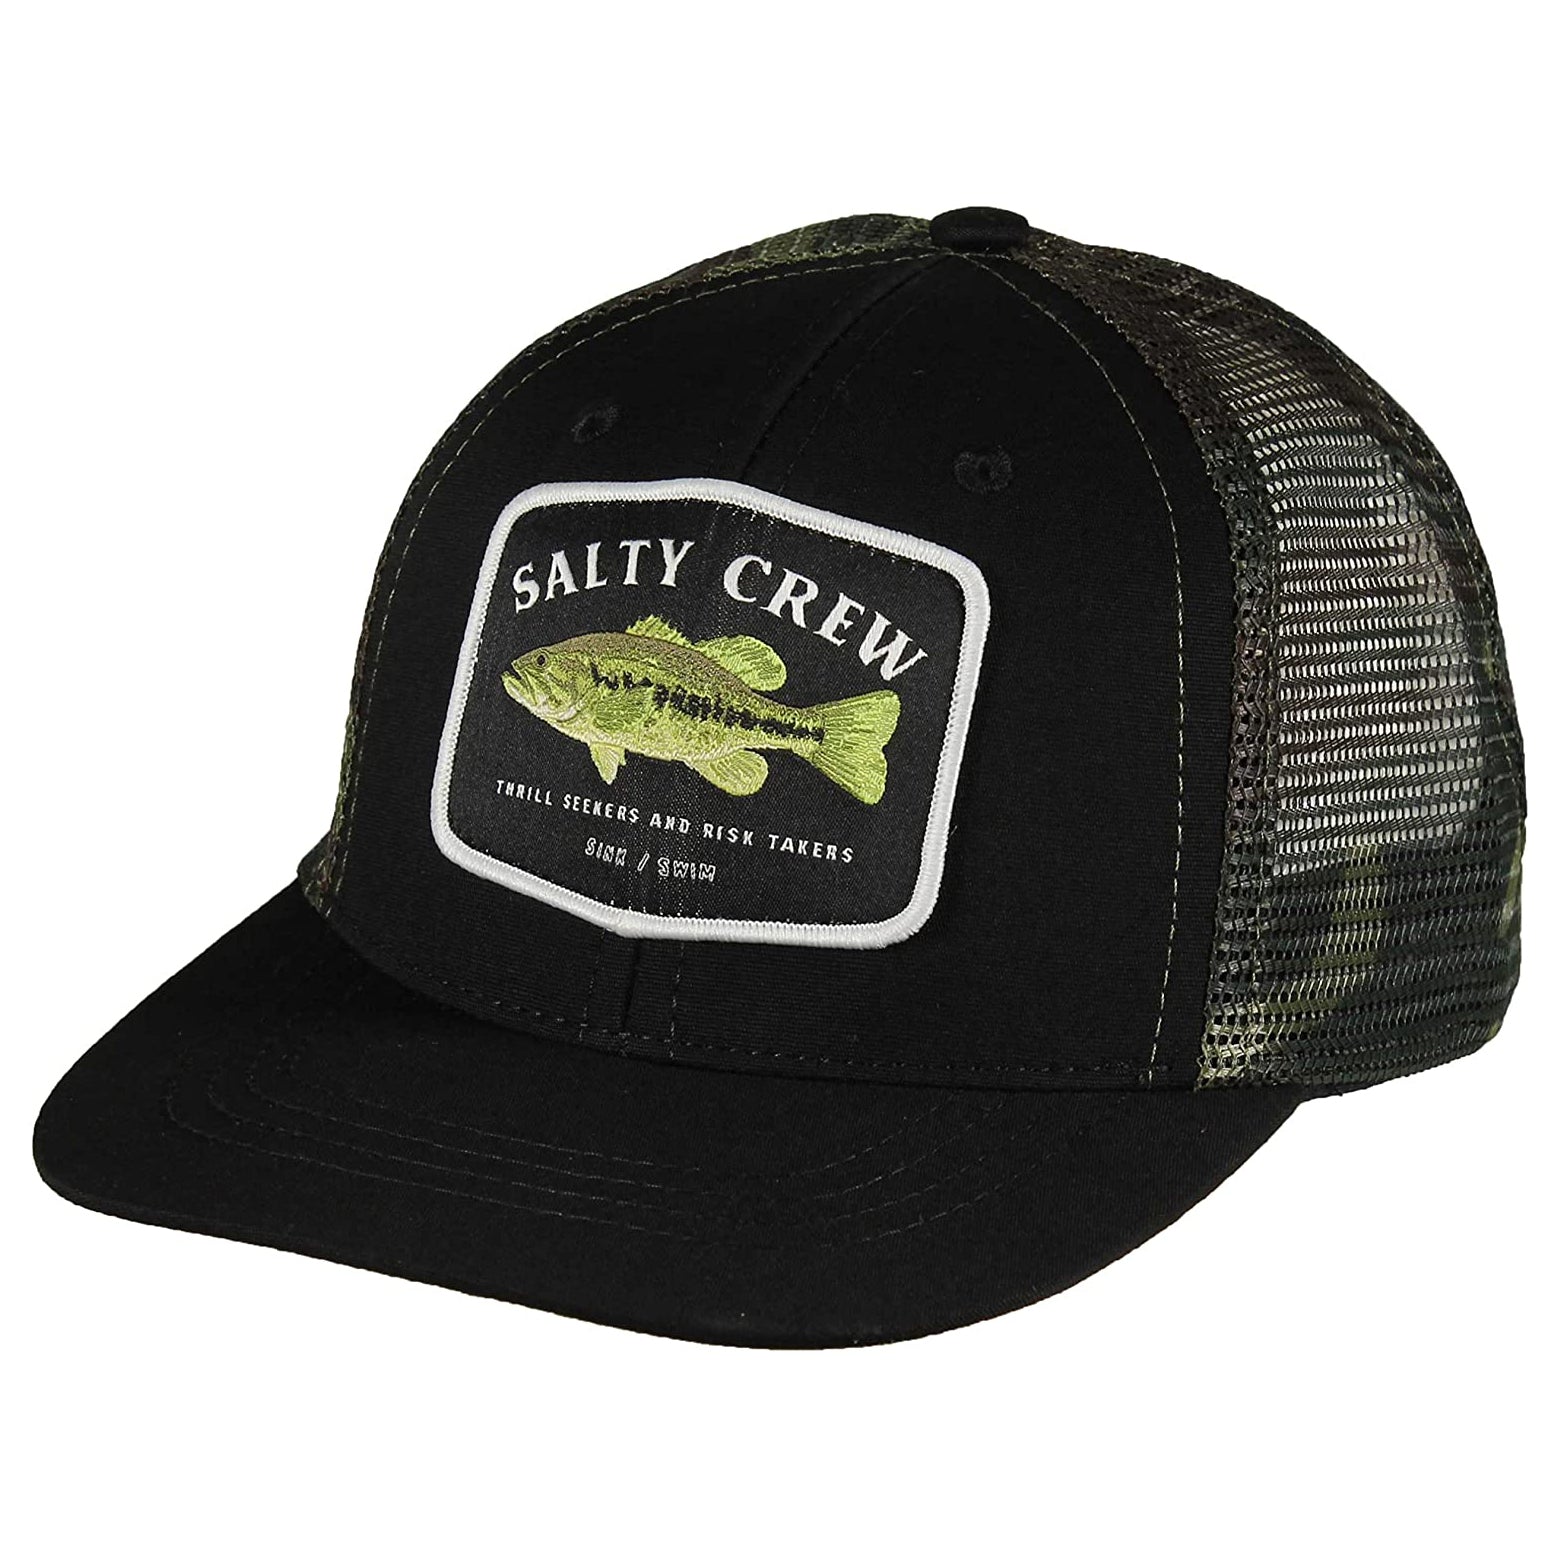 Salty Crew Bigmouth Boys Retro Trucker Hat Black Camo One Size